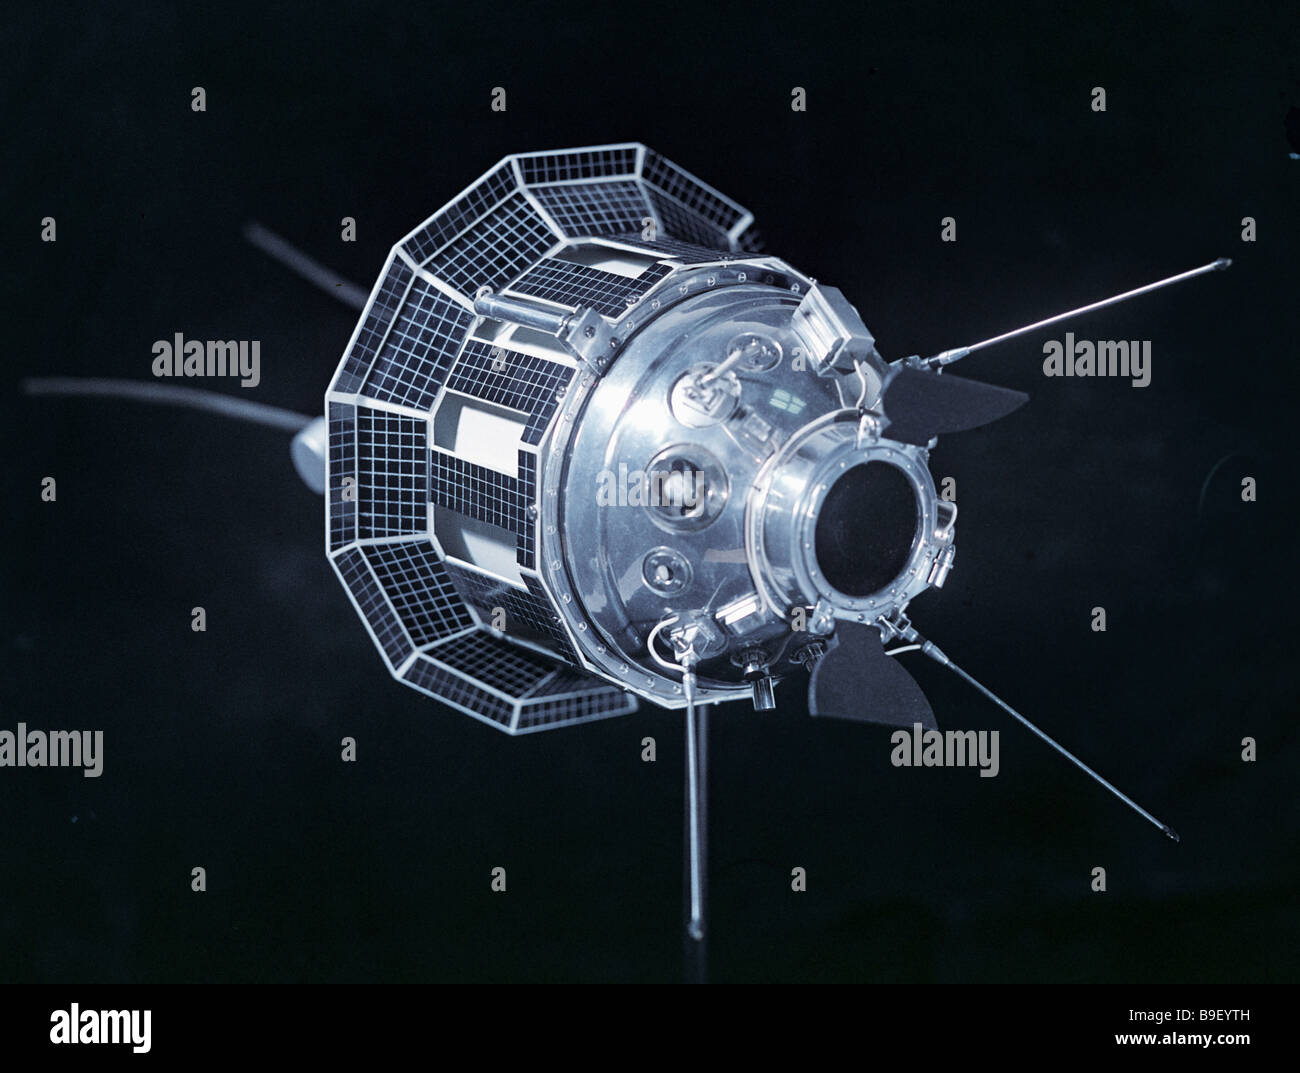 Корабль луна 3. Межпланетная станция (АМС) «зонд-3»,. Советский аппарат Луна 3. Советский космический аппарат «Луна-3». Зонд Луна 3.